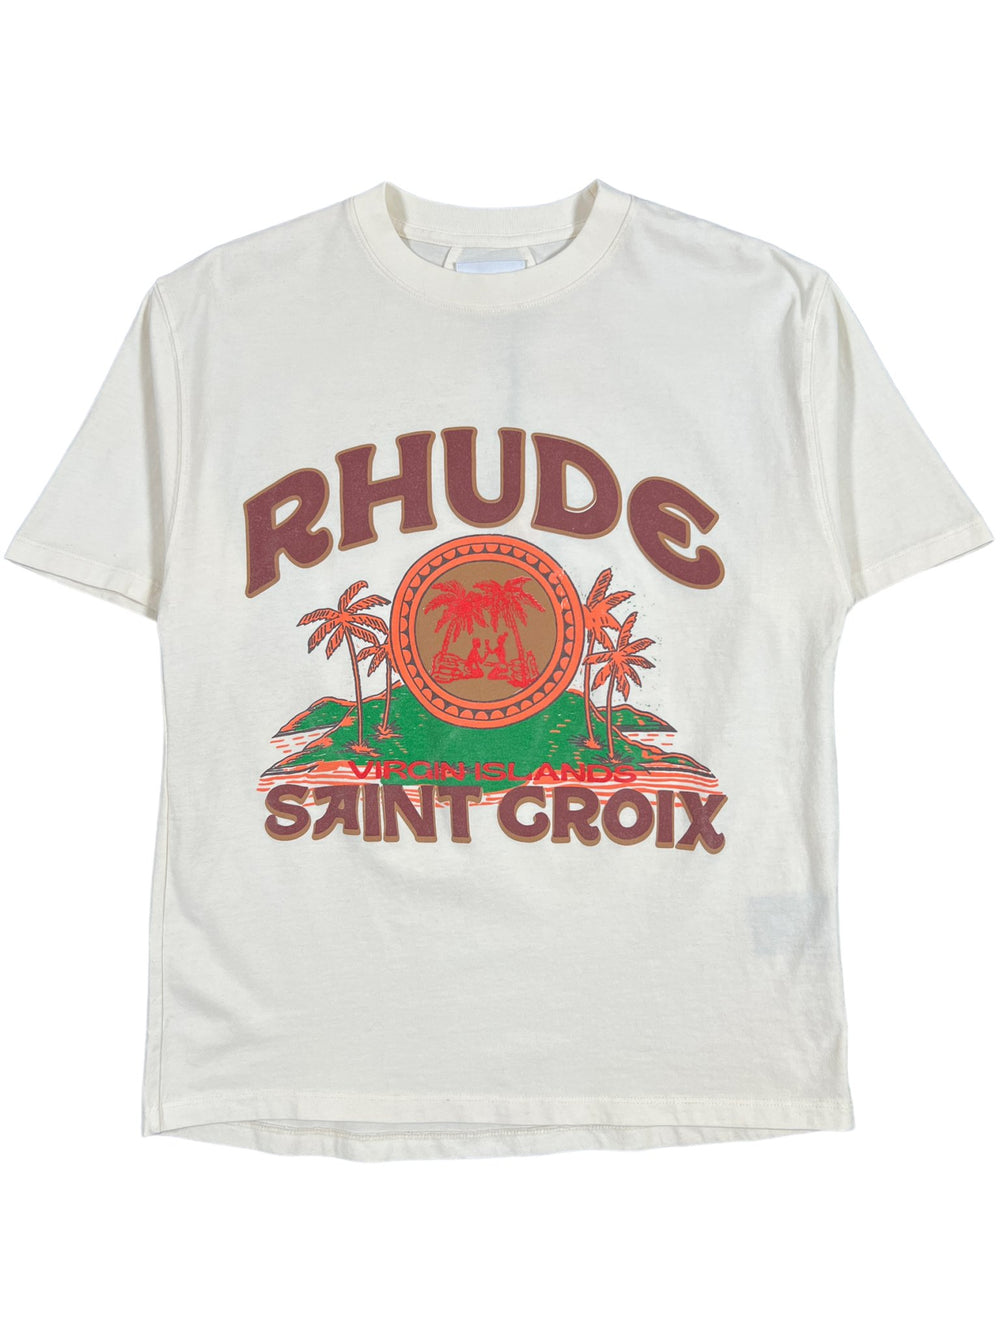 A RHUDE t-shirt that says Rhude Saint Croix.